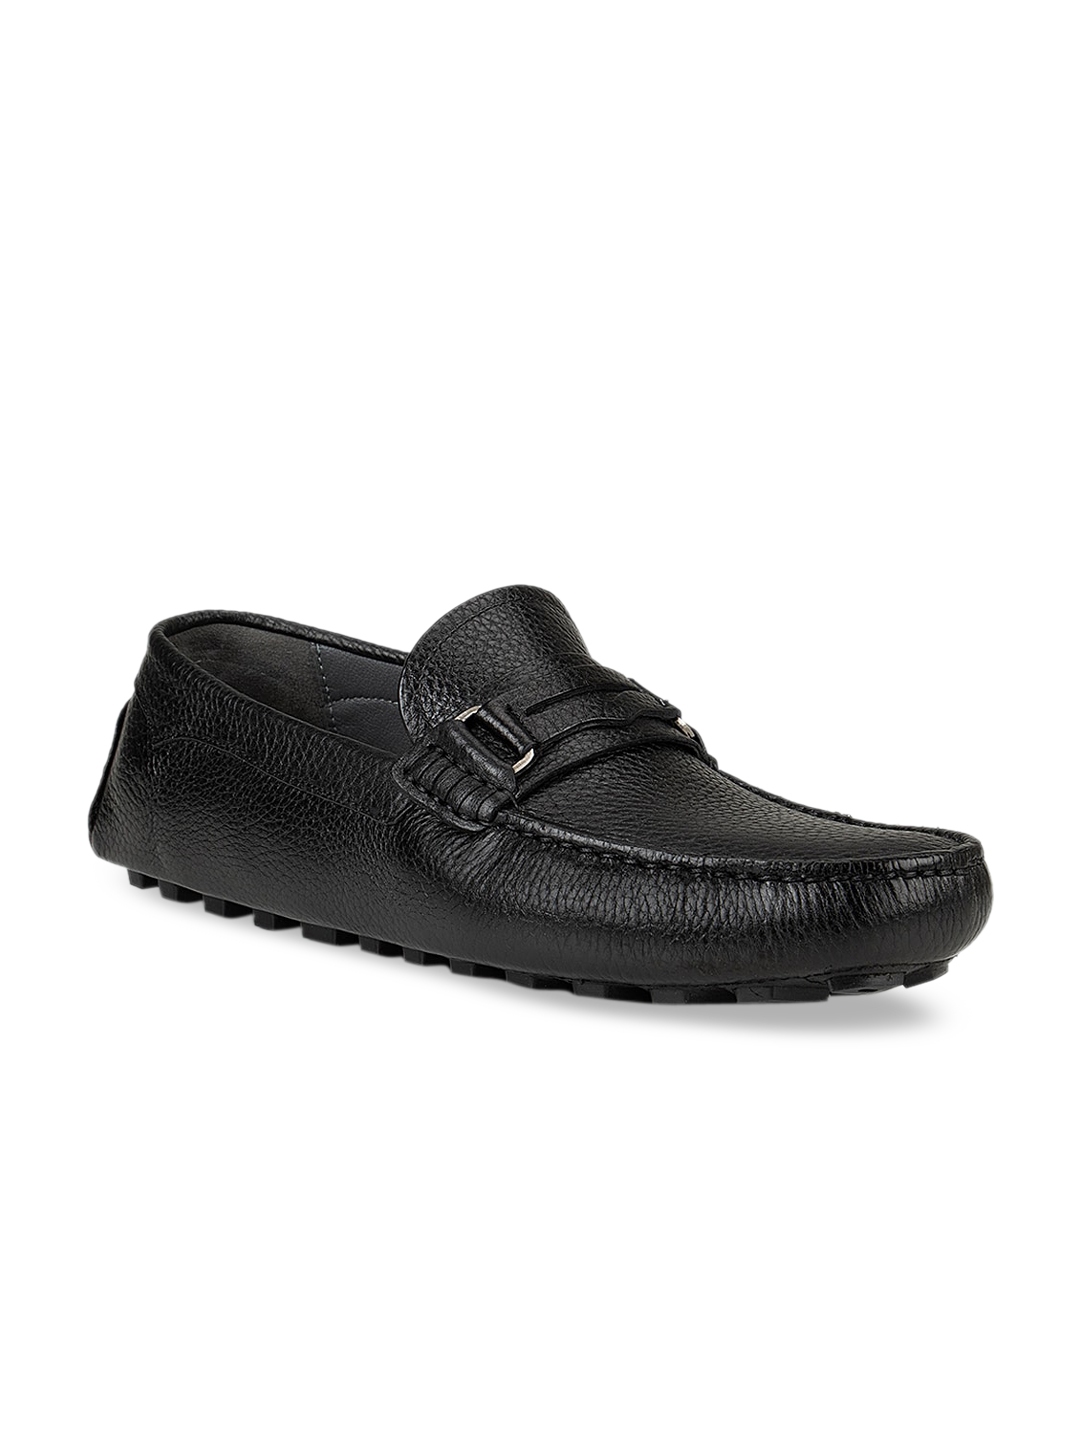 Buy ROSSO BRUNELLO Men Black Solid Leather Formal Loafers - Formal ...